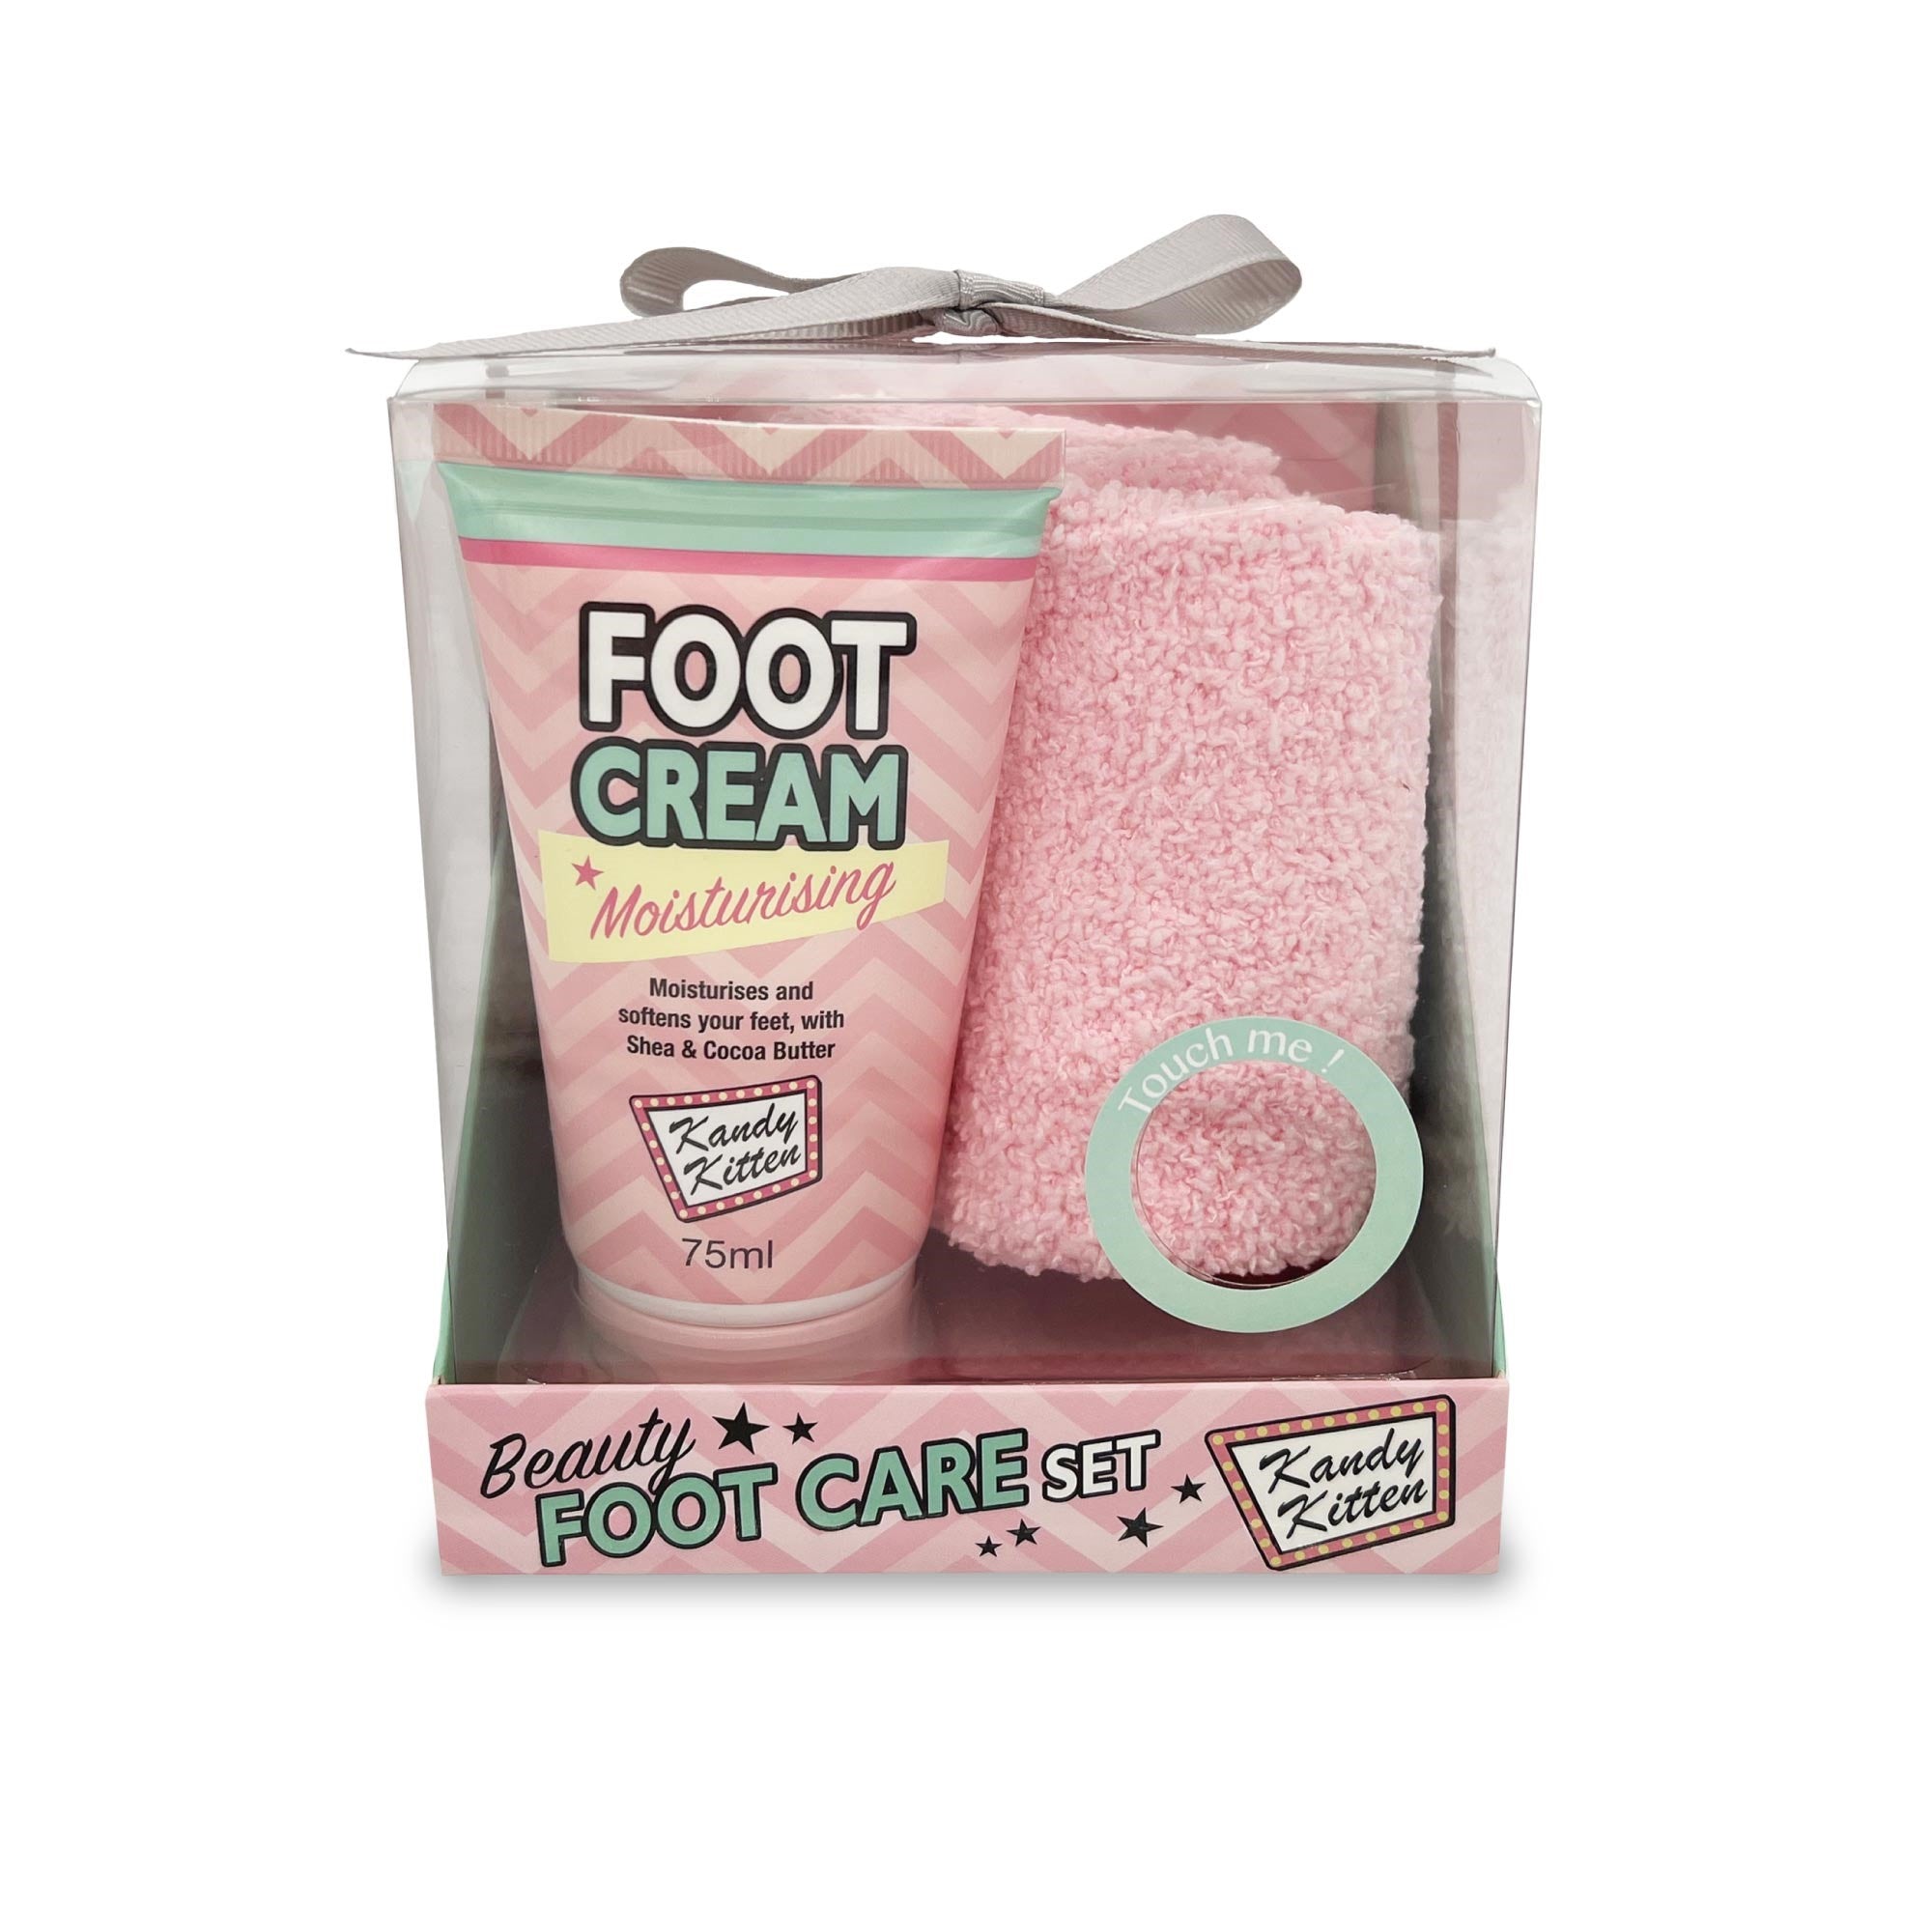 Kandy Kitten Foot Care Gift Set  | TJ Hughes